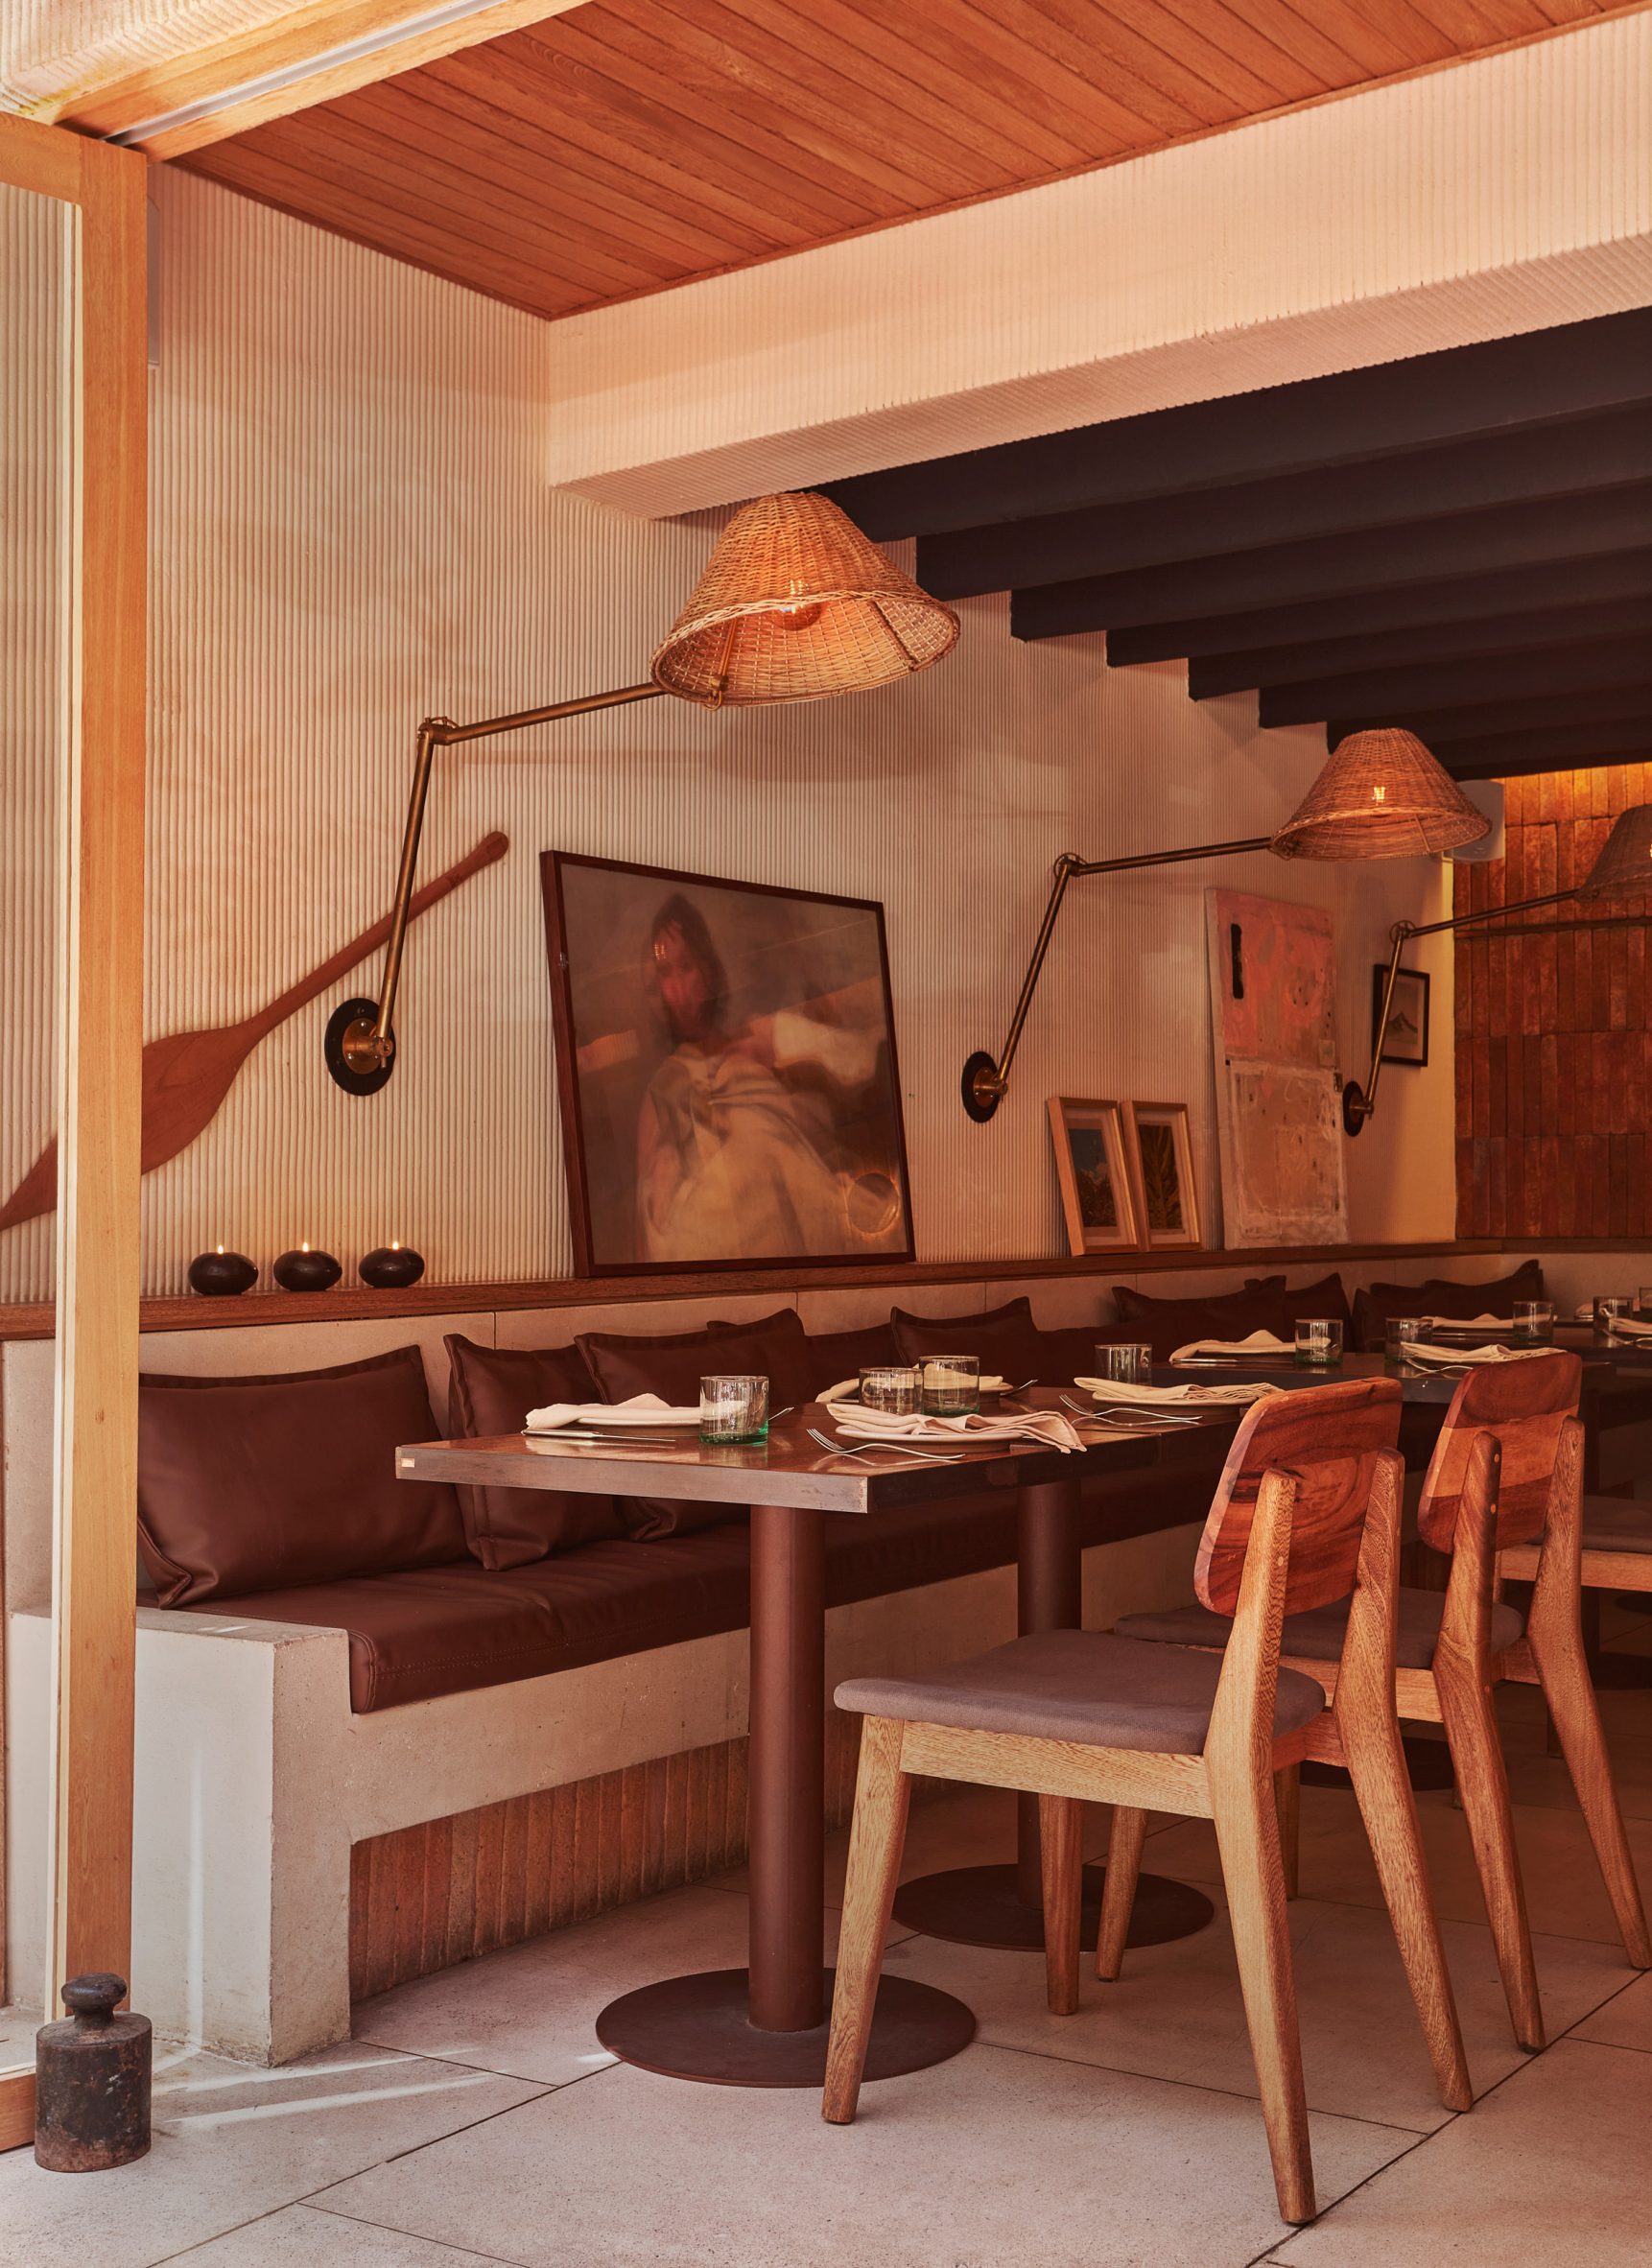 Ideal Restaurant by Lorenzo Botero and Martín Mendoza